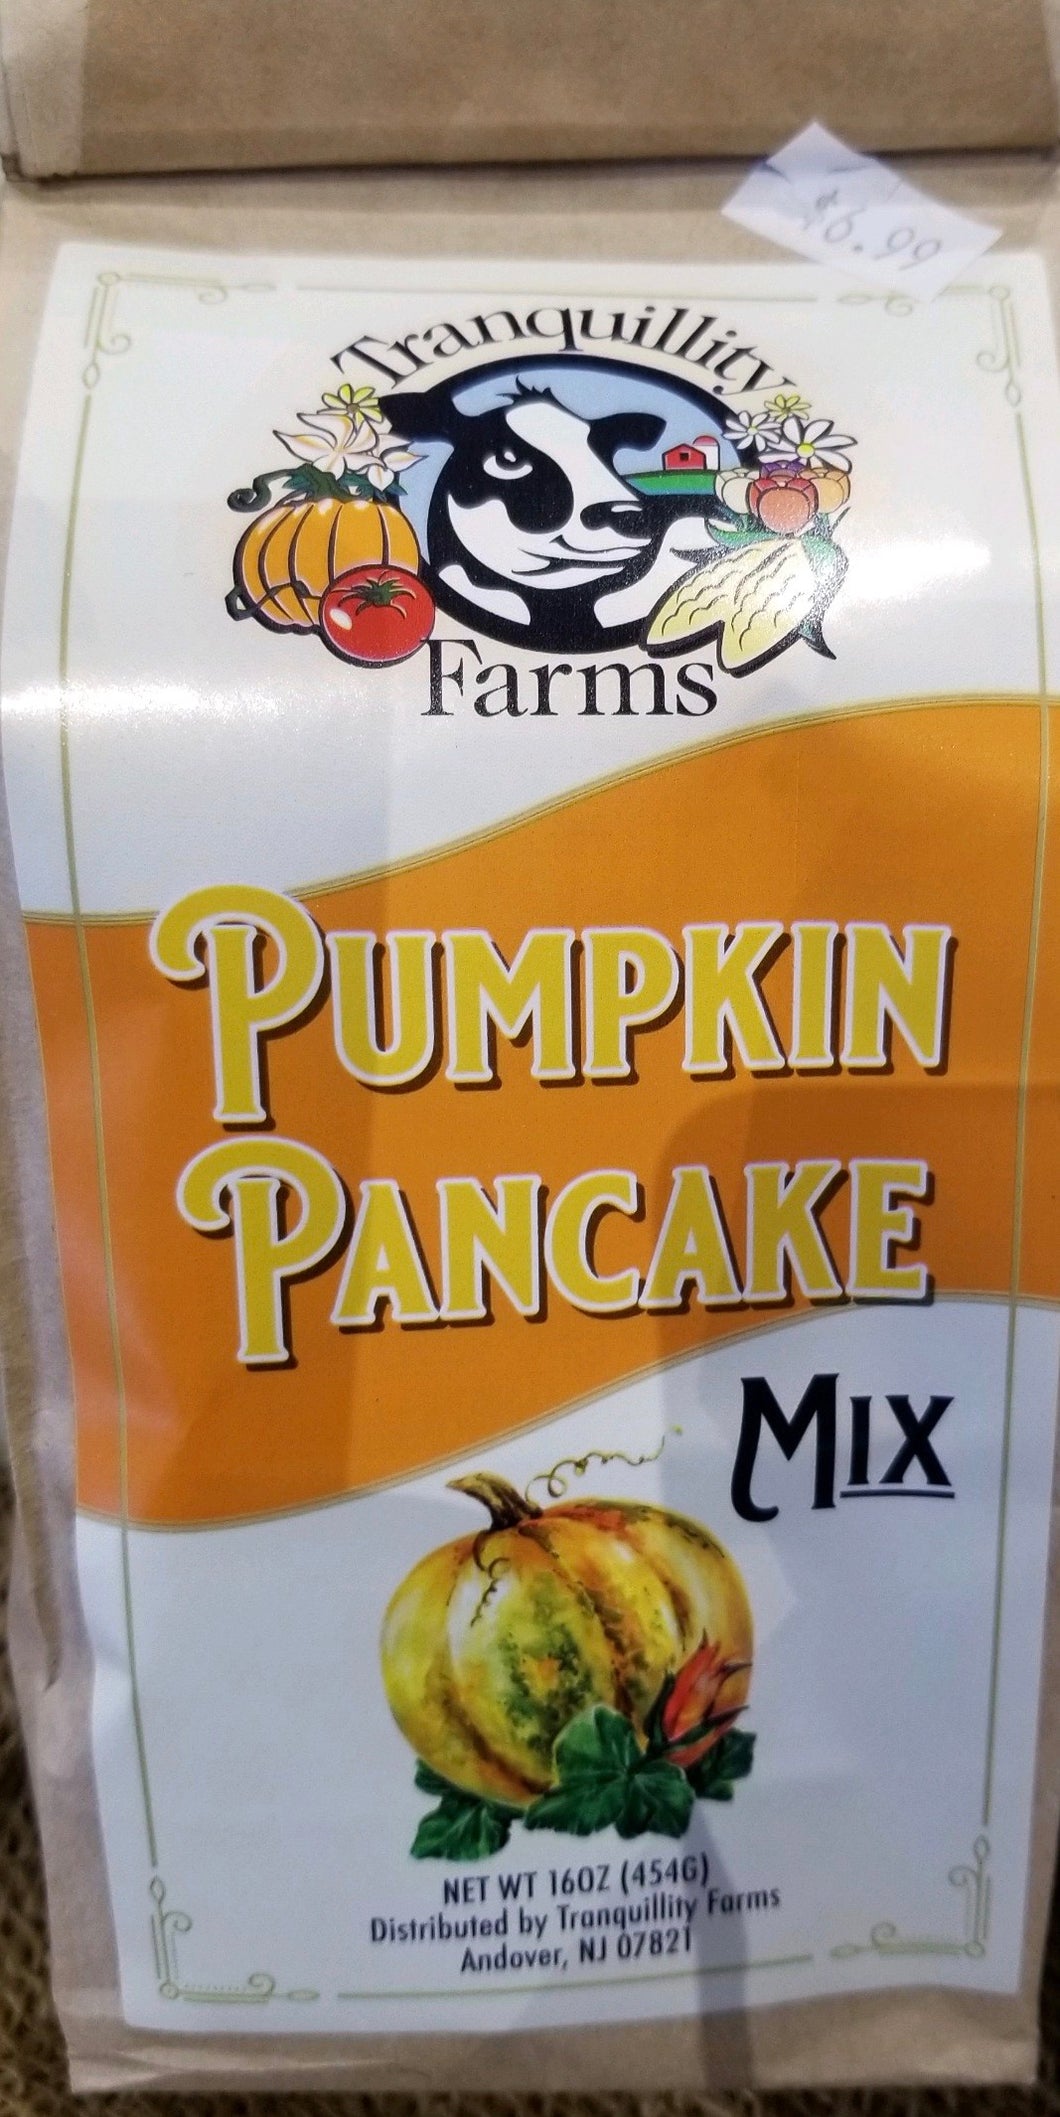 Pumpkin pancake mix